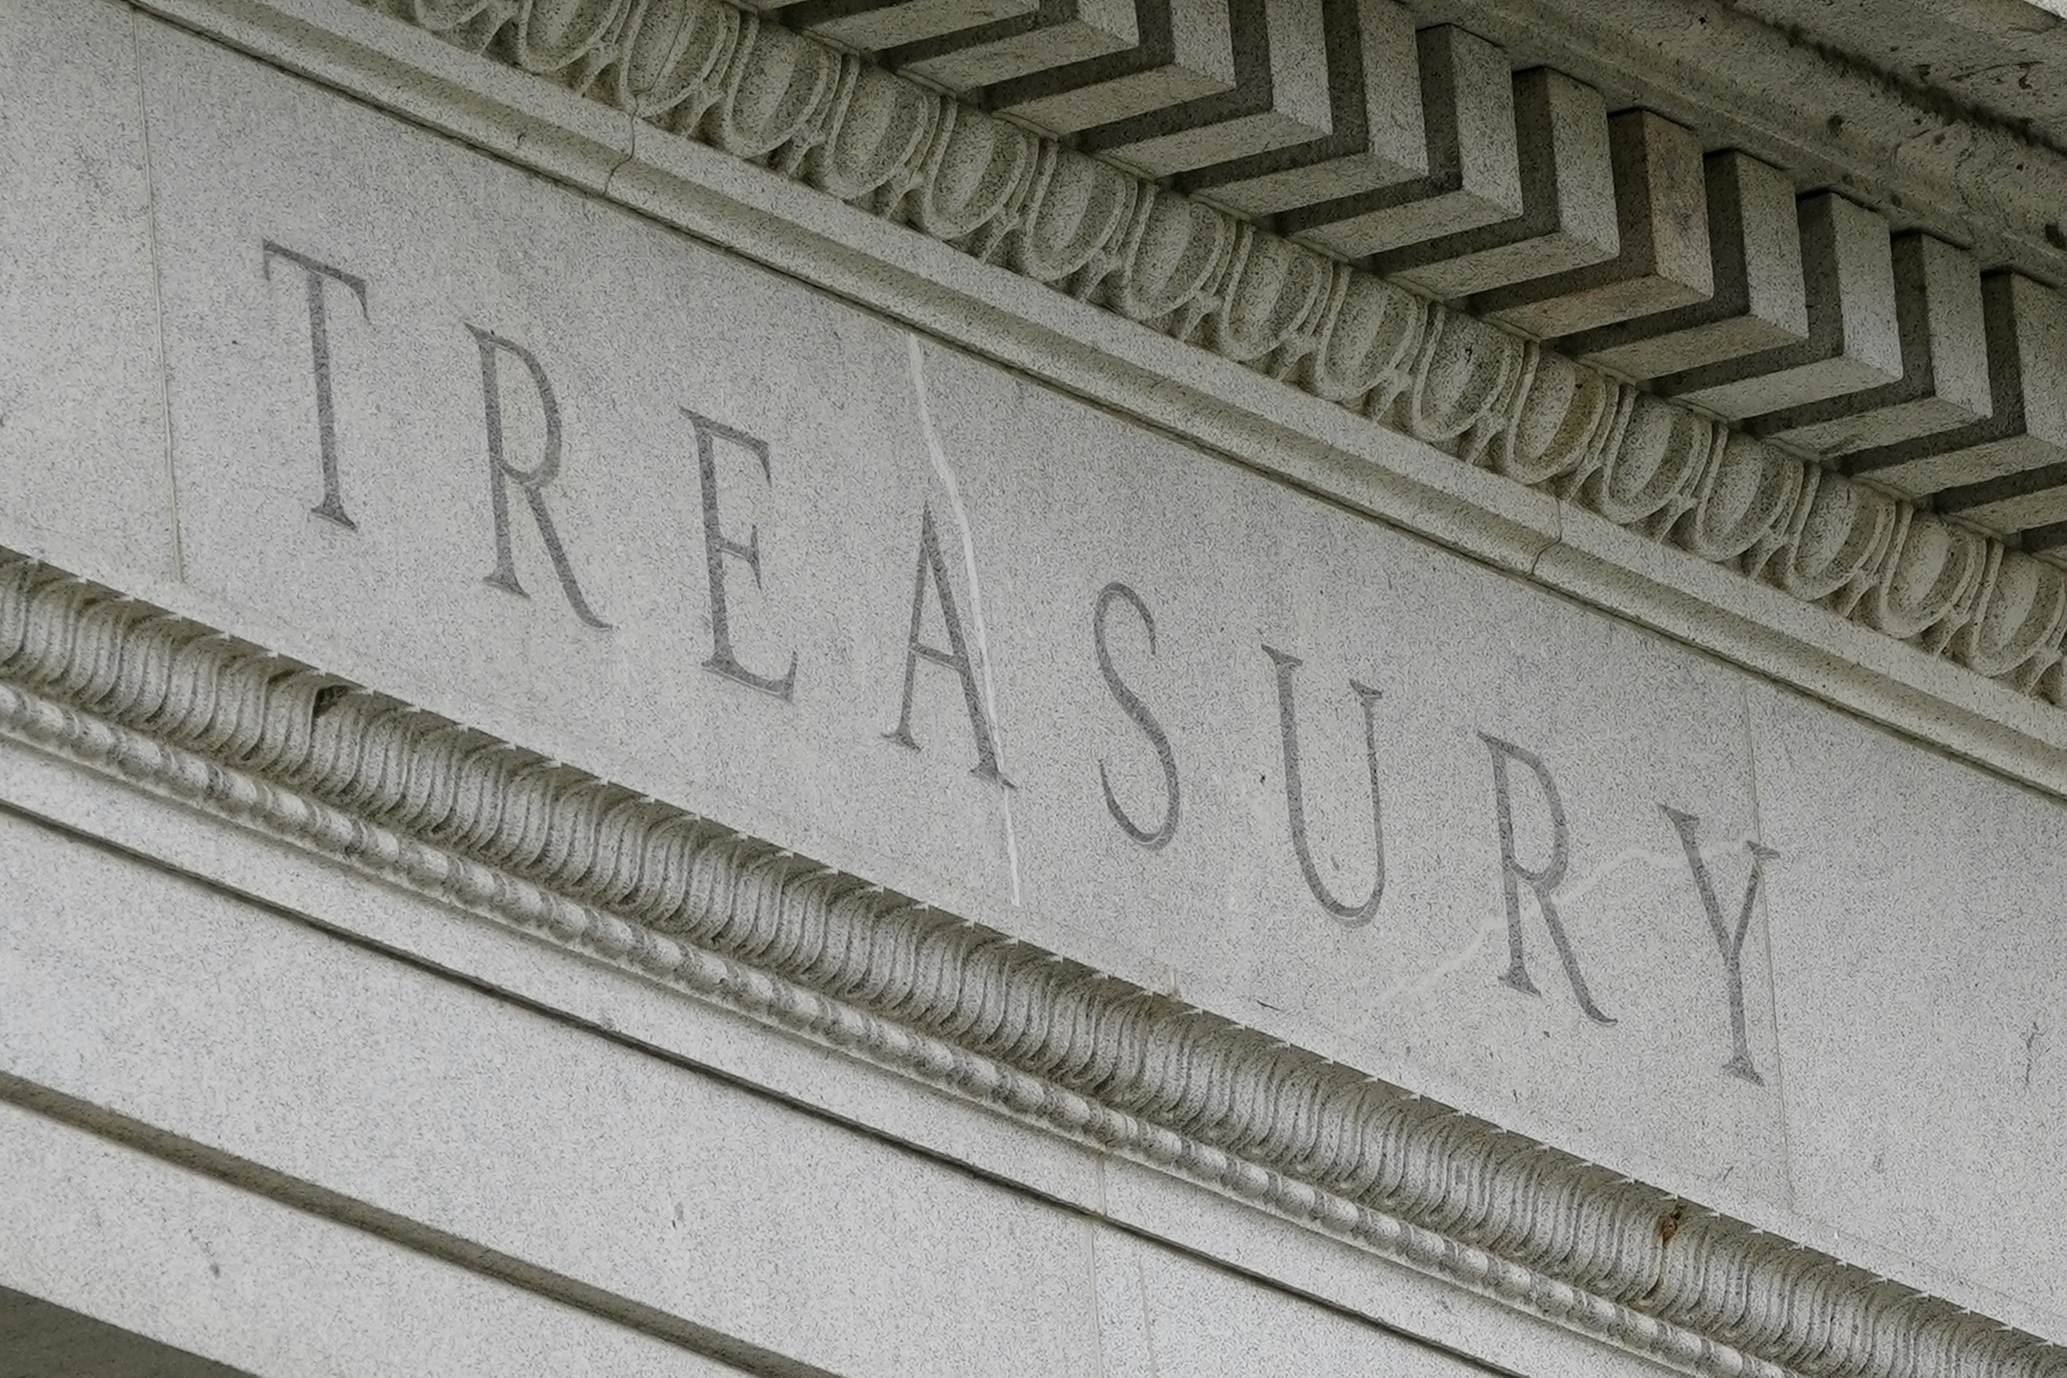 Treasury Department.